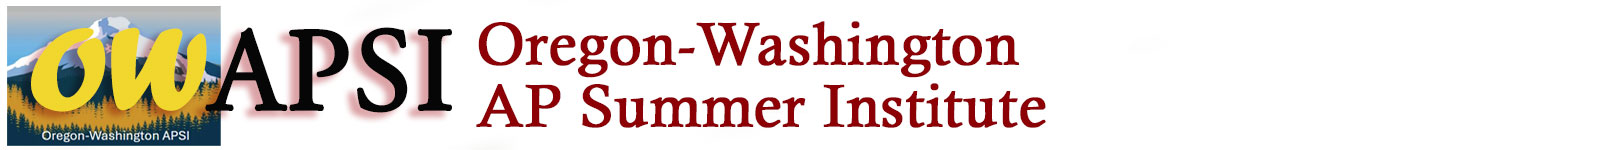 Oregon-Washington AP Summer Institute